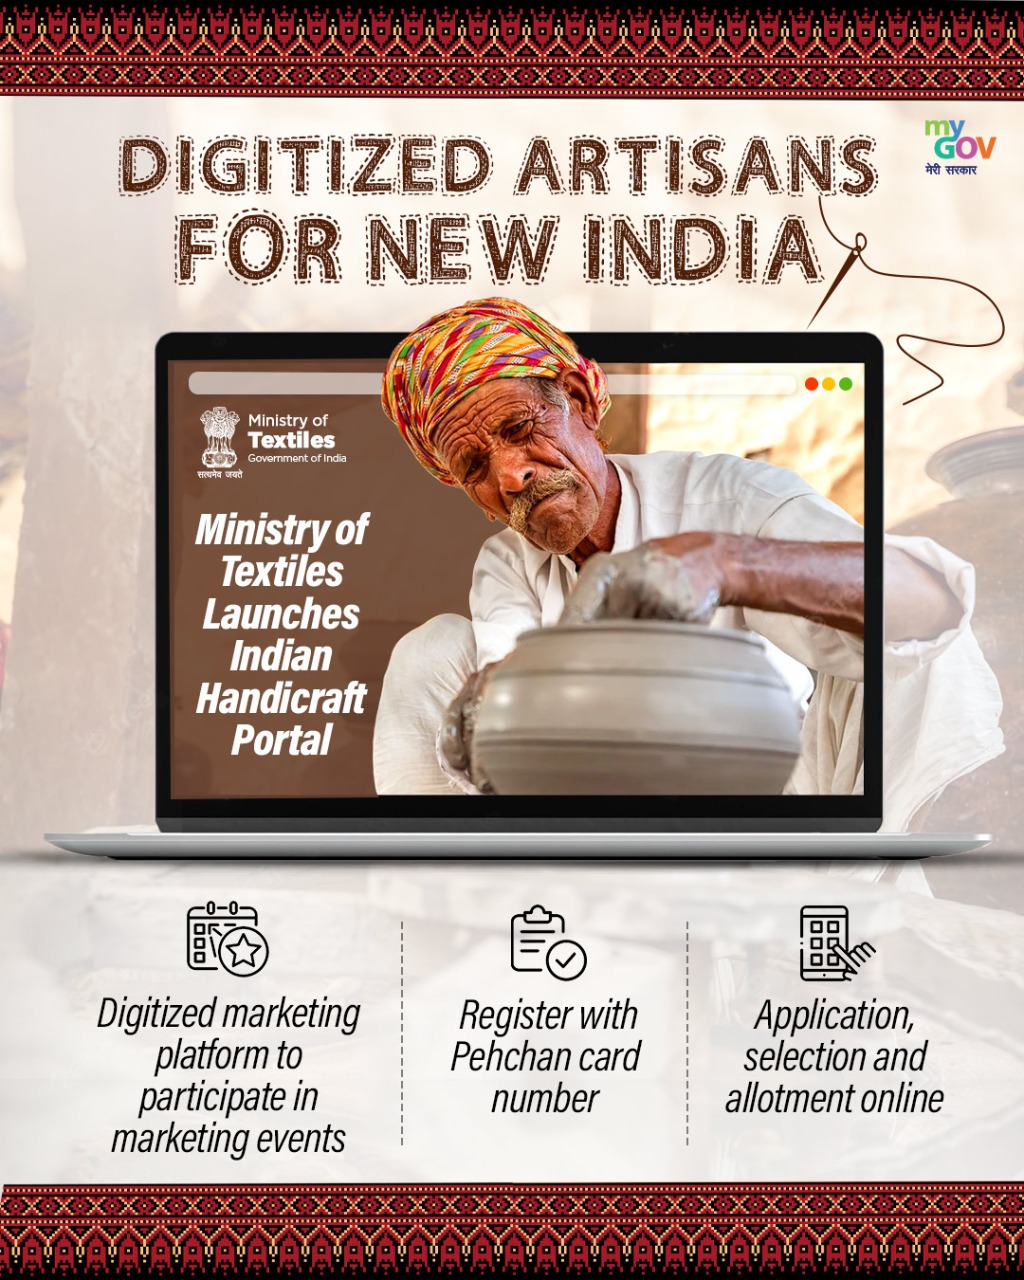 Indian Handicraft Portal for our #Aatmanirbhar craftsmen